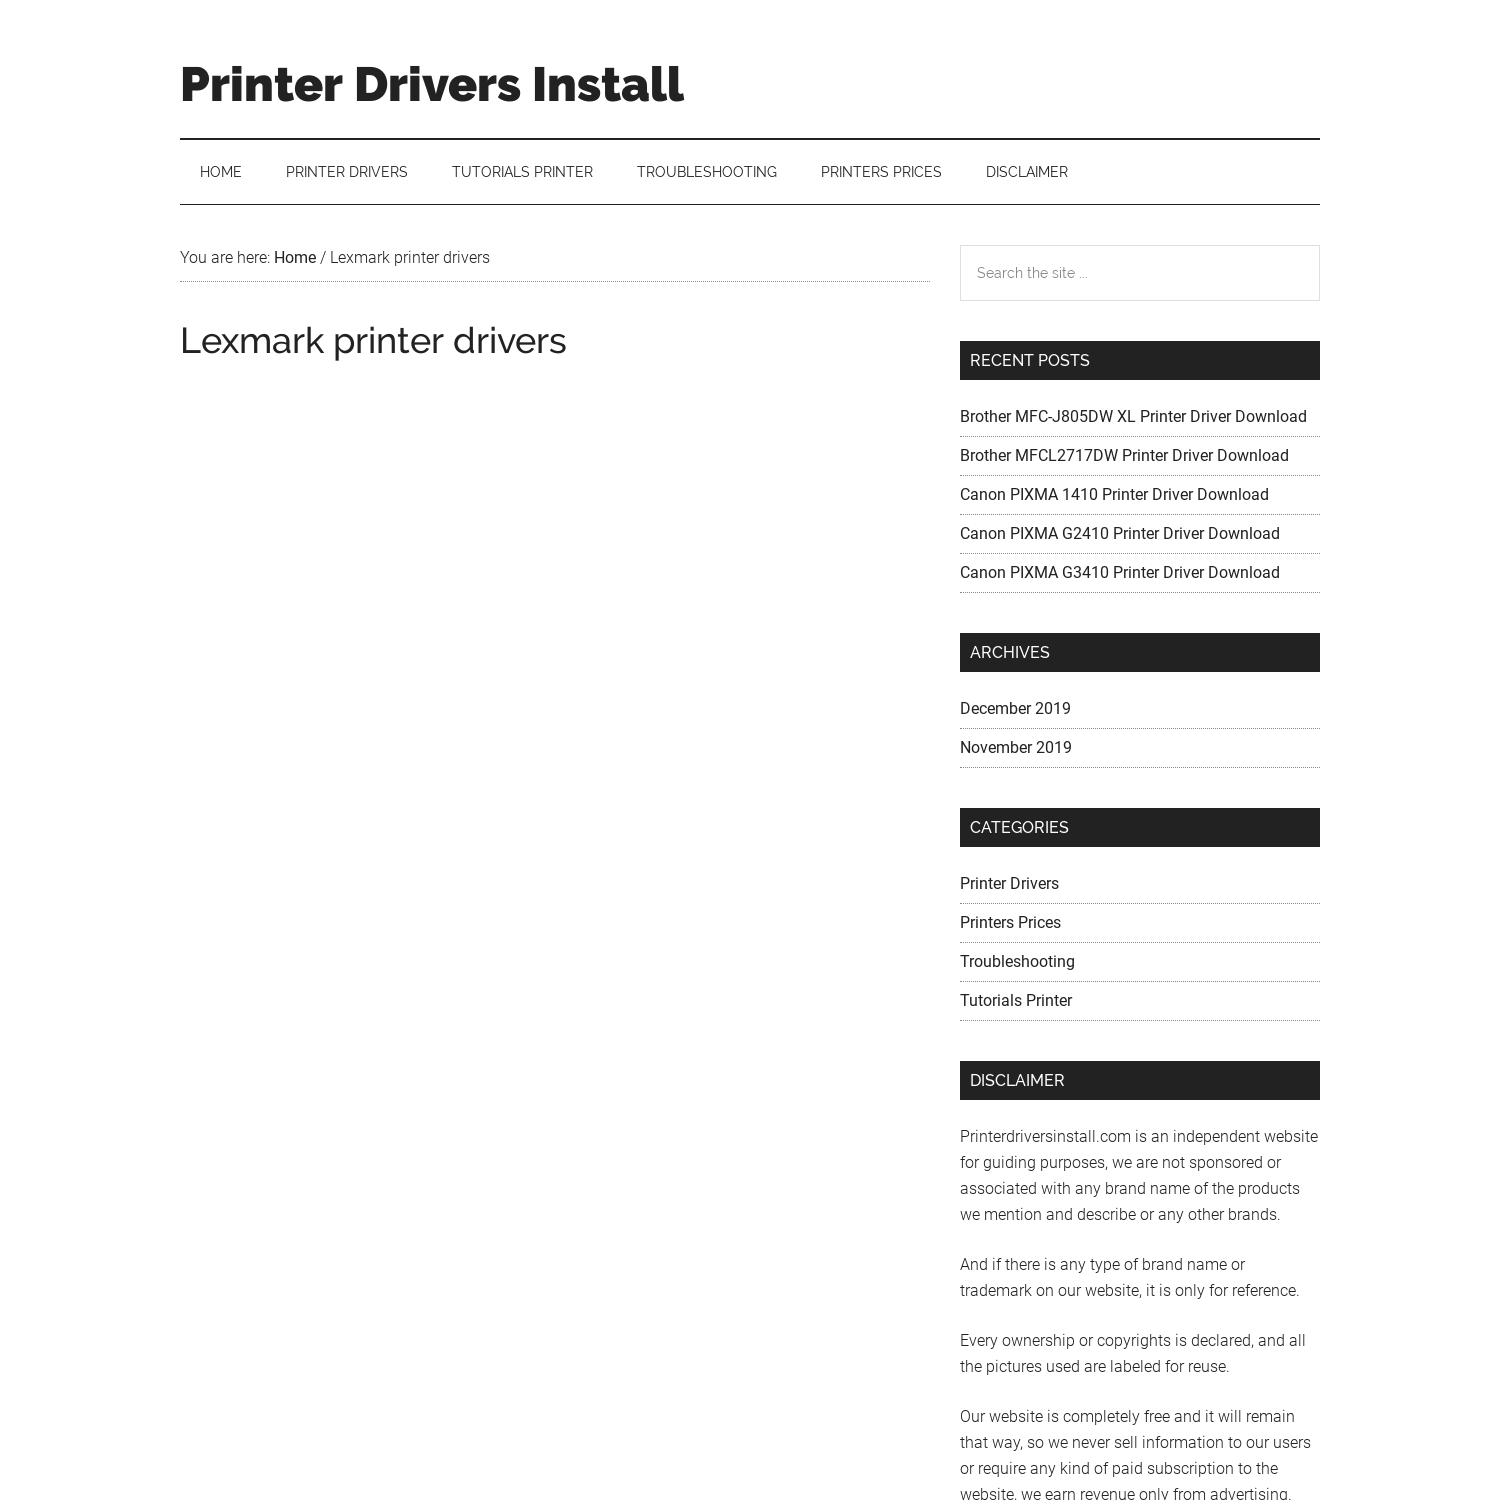 Lexmark printer drivers - Printer Drivers Install